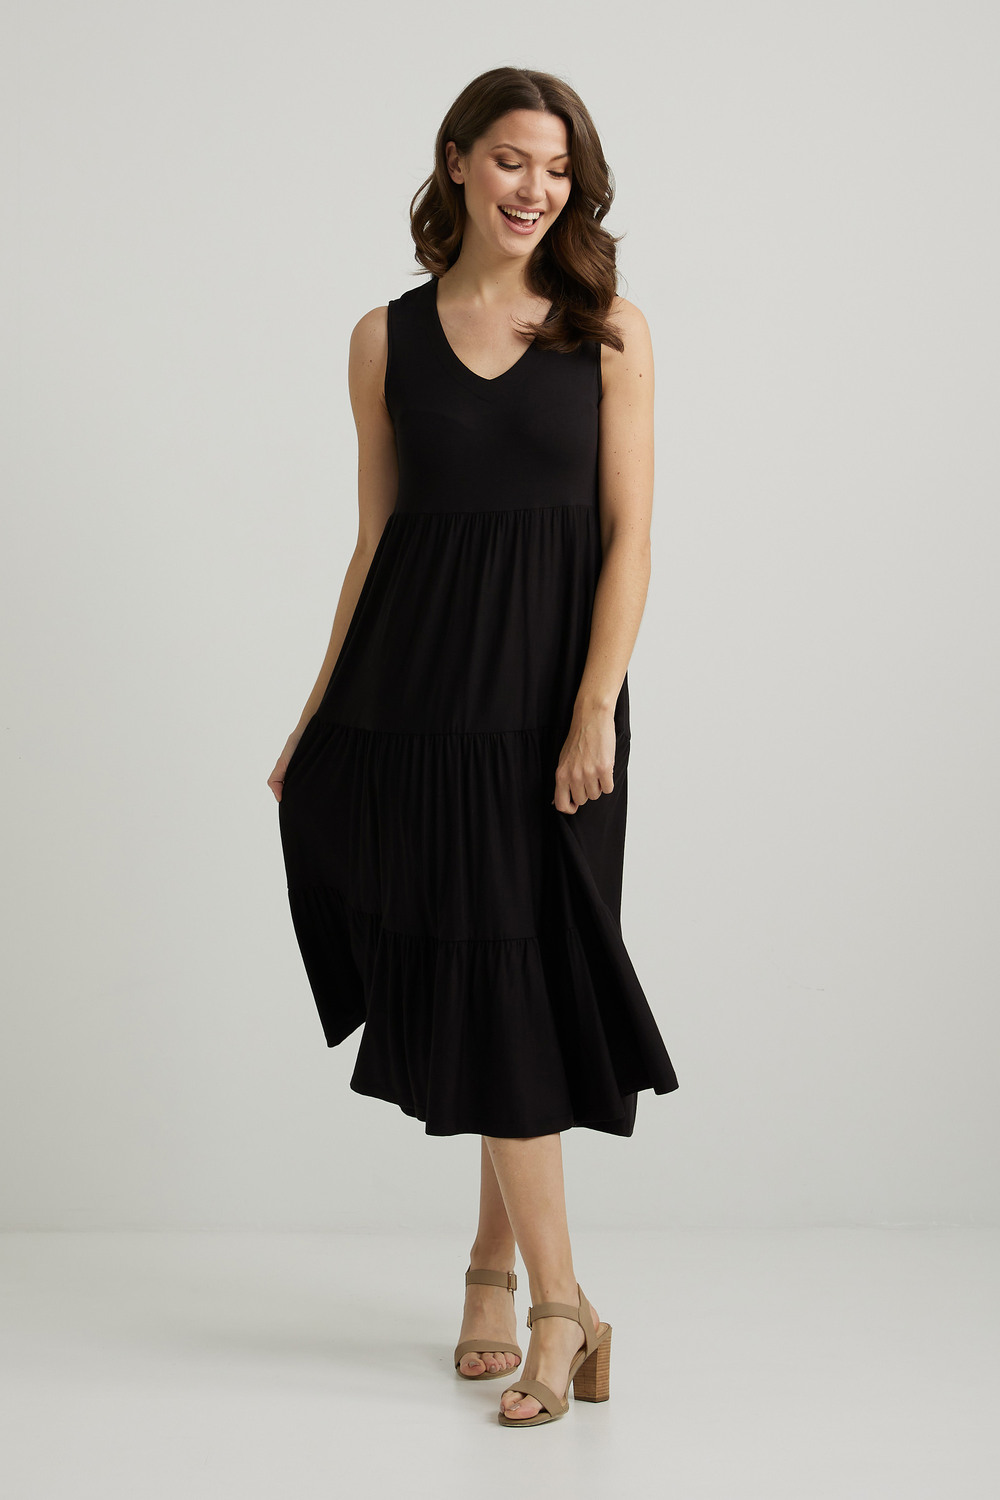 Joseph Ribkoff Tiered Dress Style 222213. Black